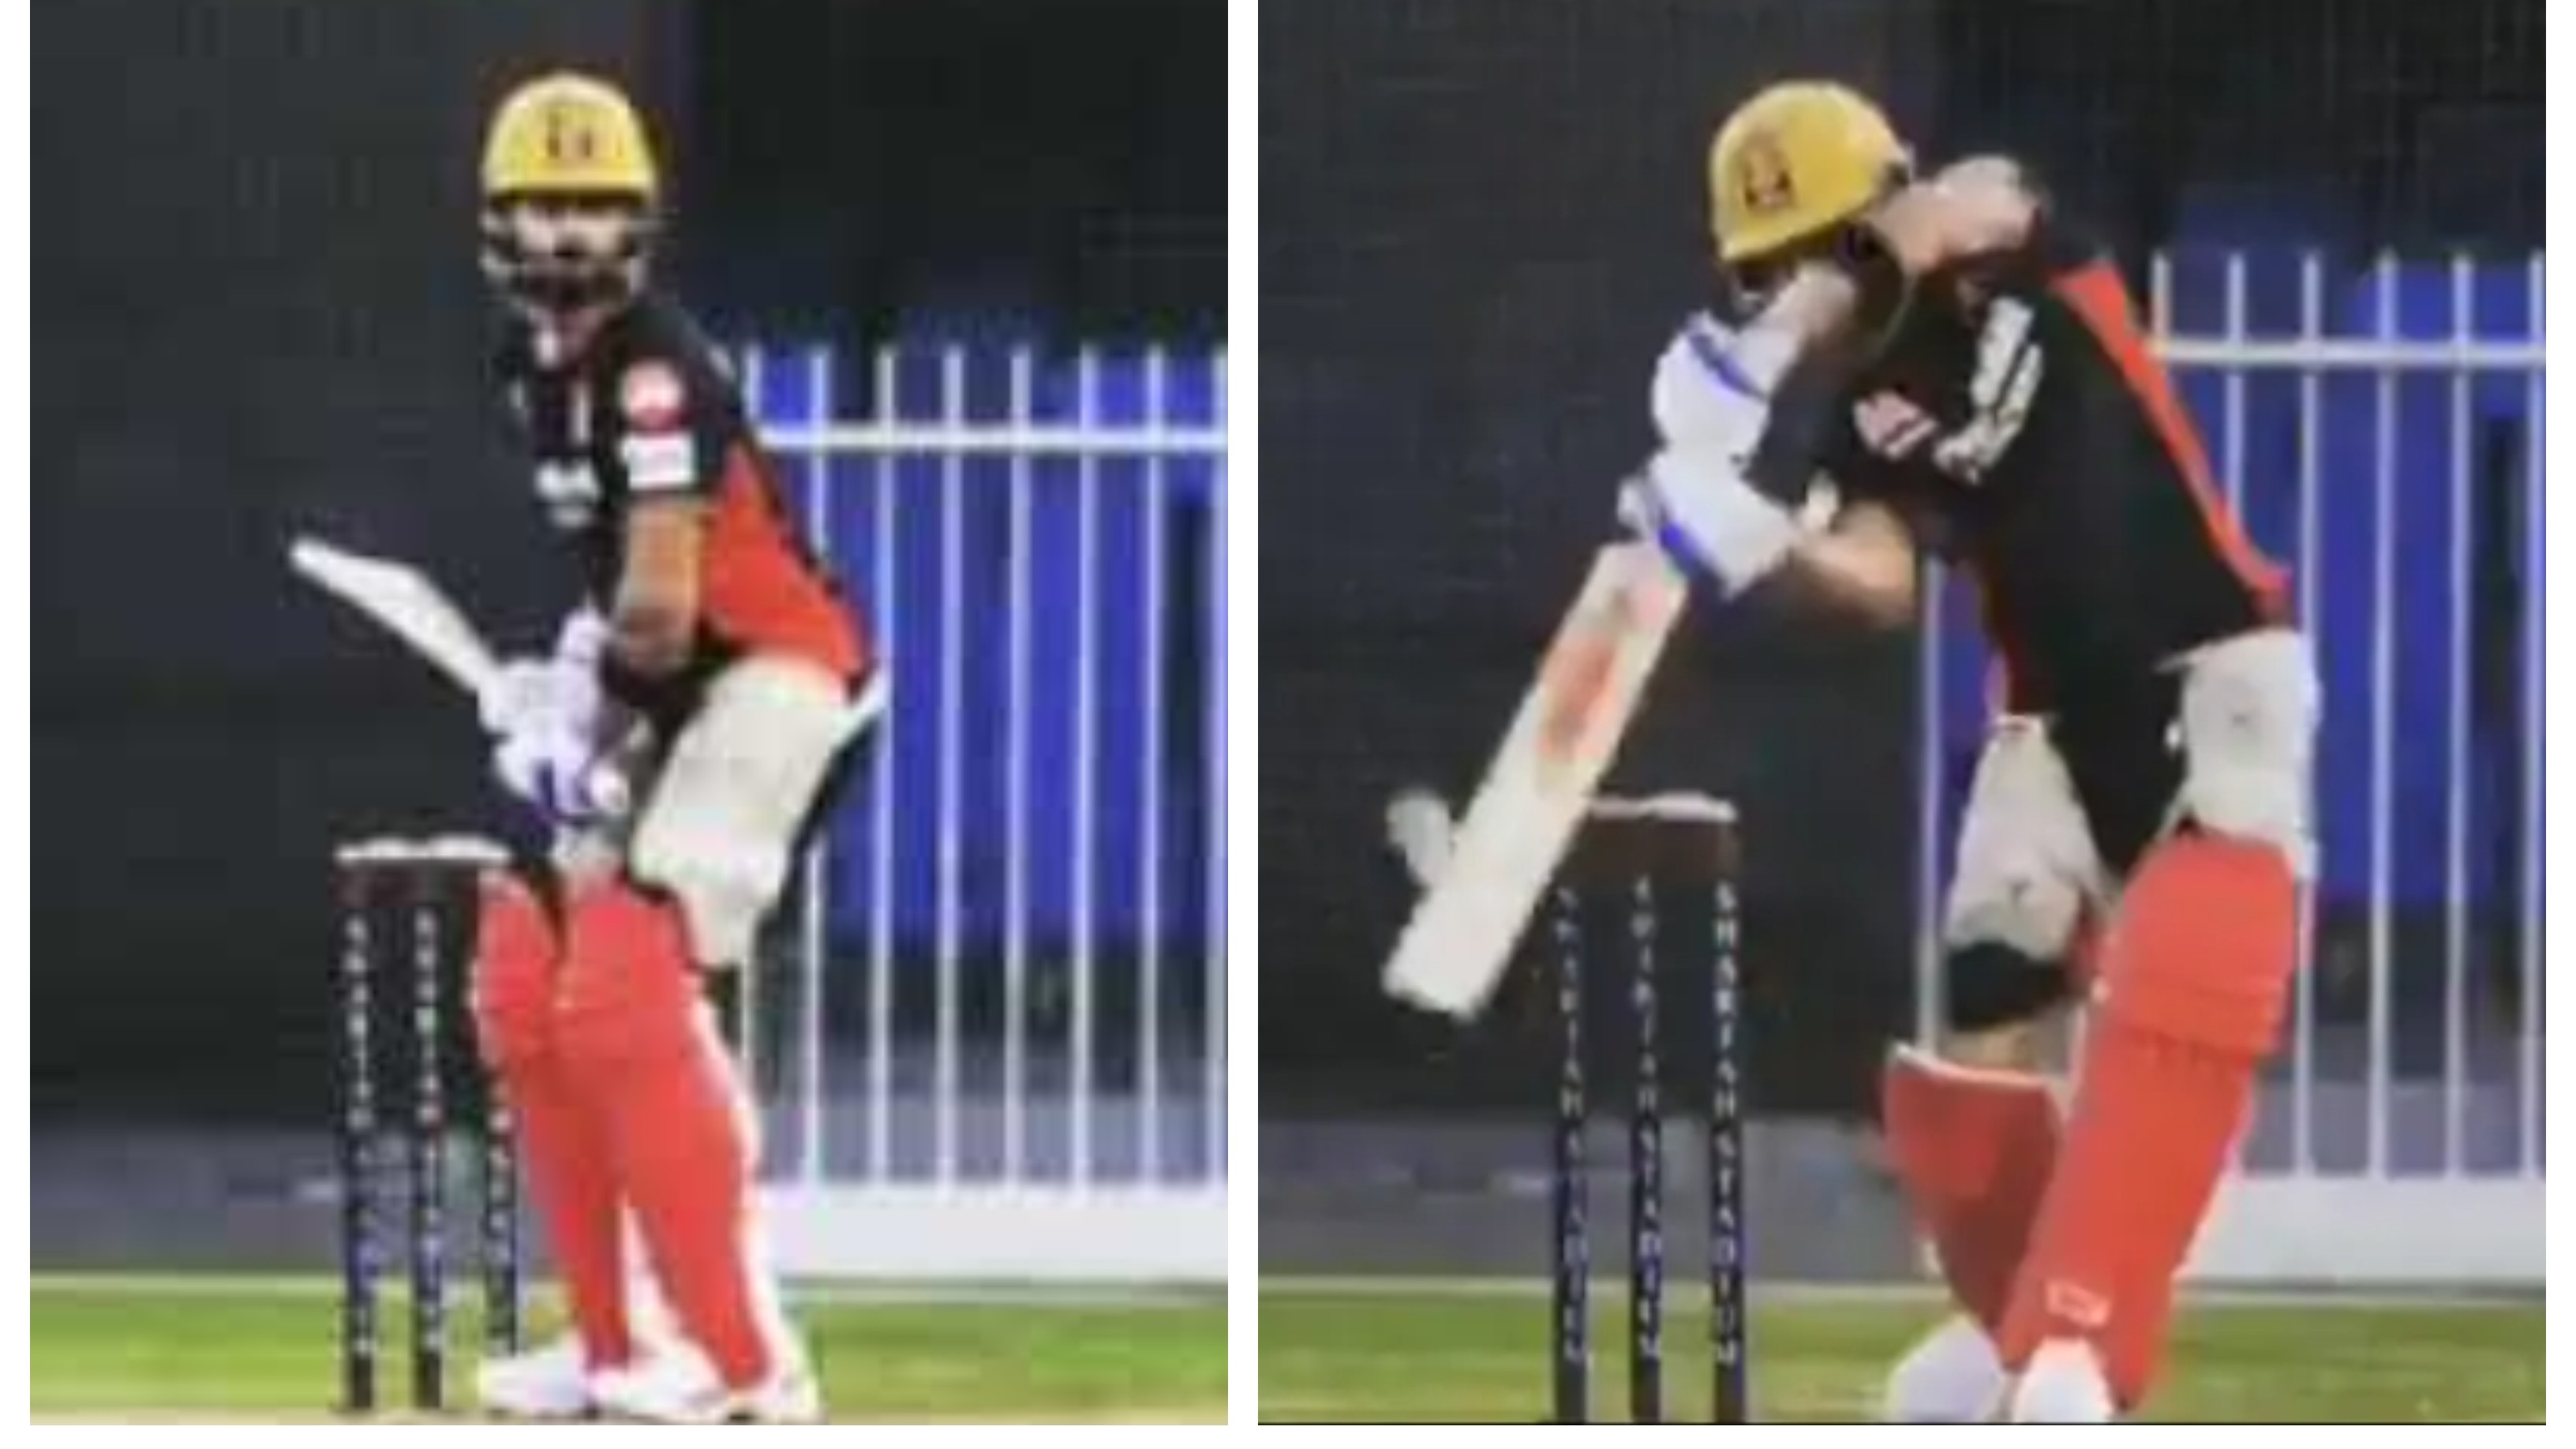 IPL 2020: WATCH – Virat Kohli executes proper cricketing shot in nets; shares video on Twitter